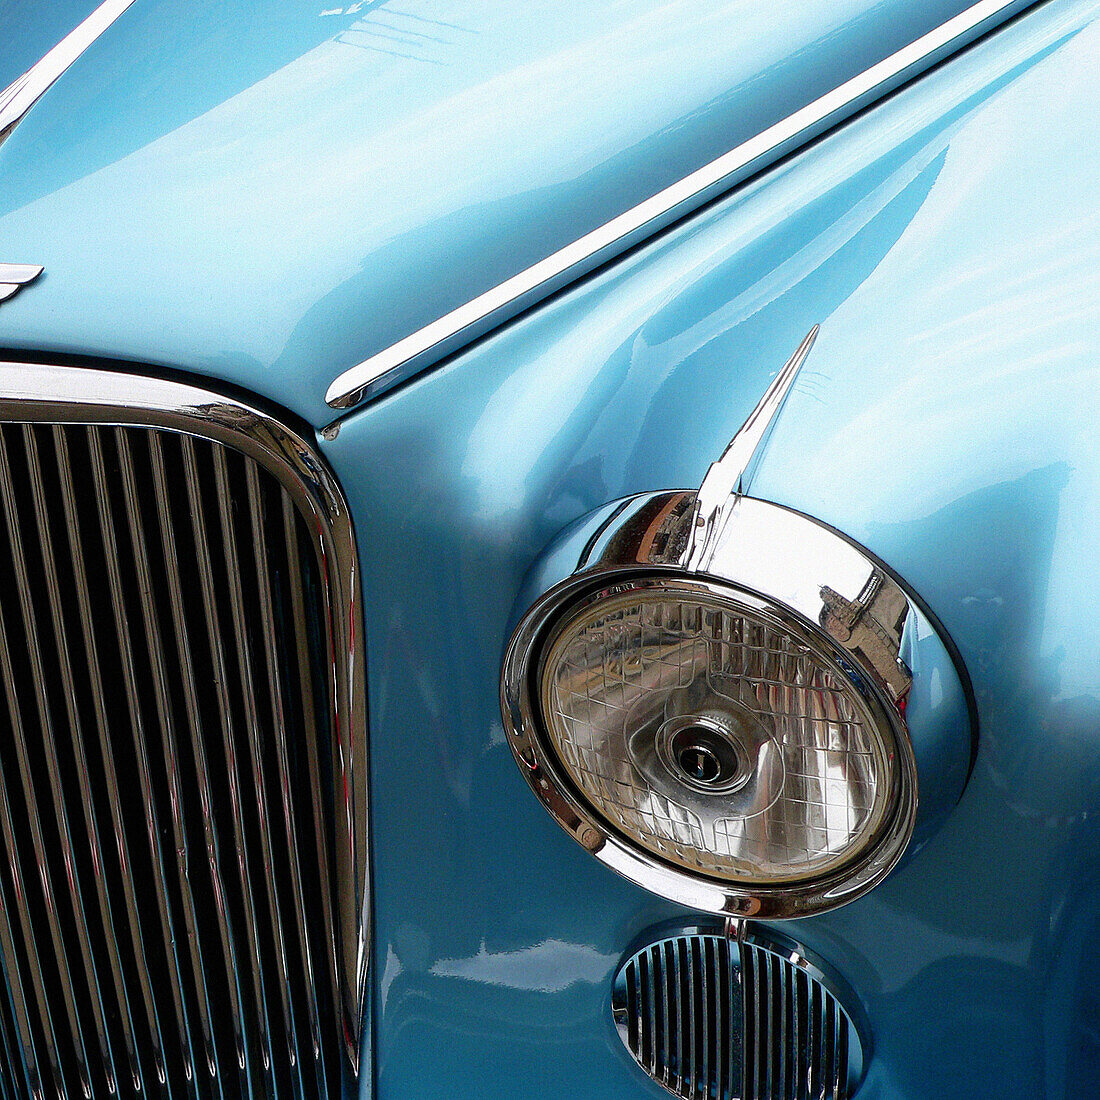 Detalle delantero de un coche de época de color azulen perfecto estado